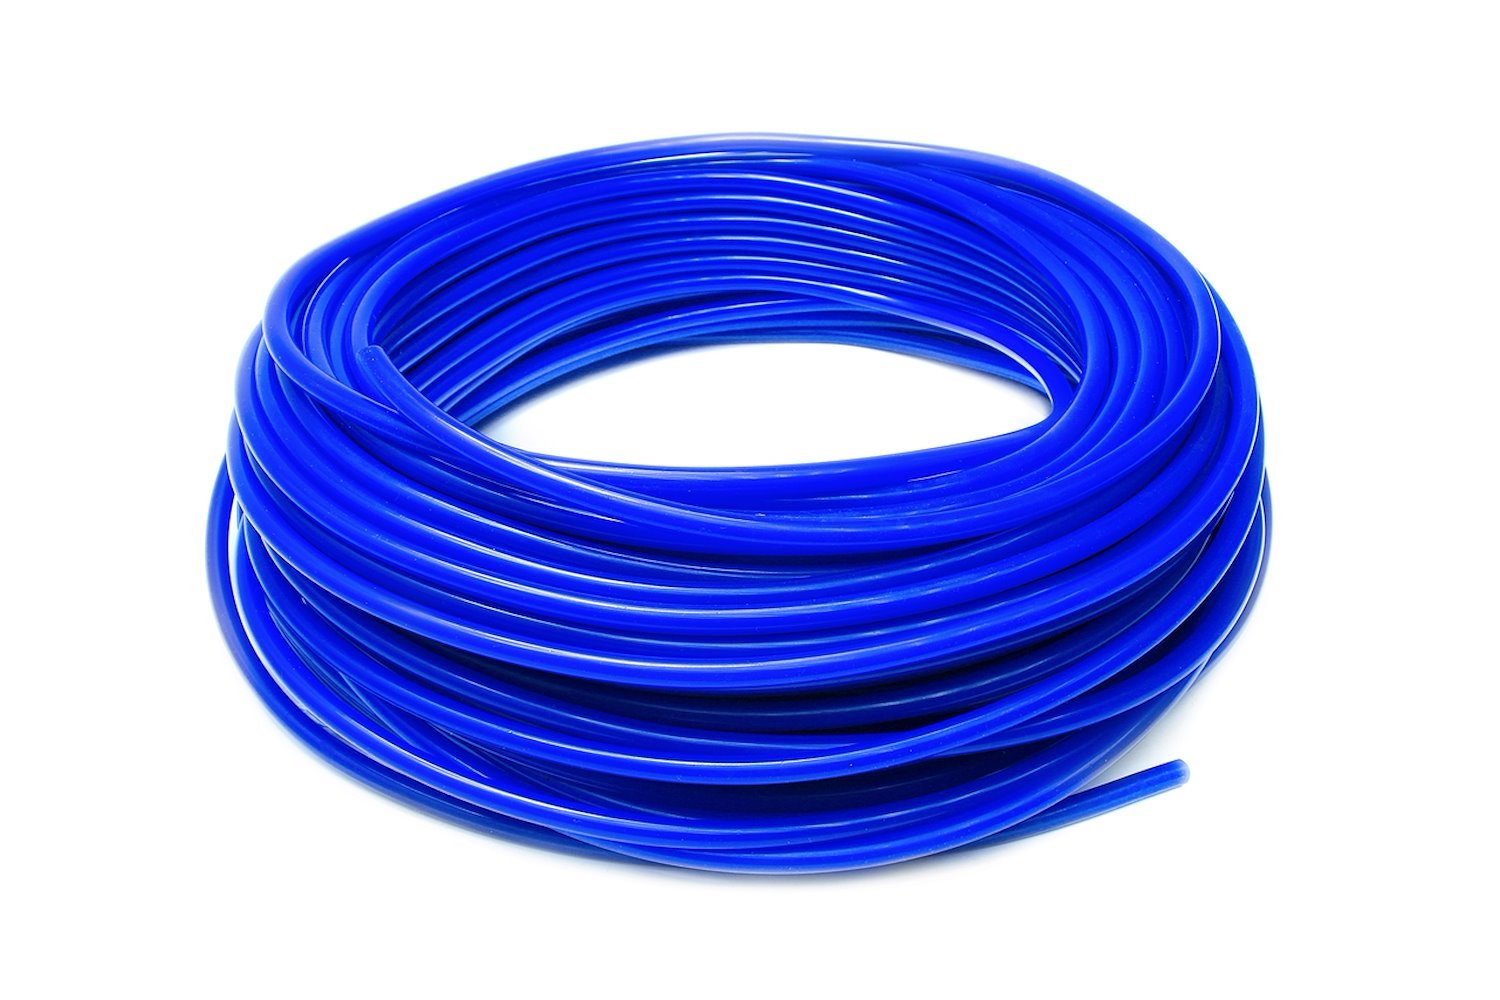 HTSVH6-BLUEx50 High-Temperature Silicone Vacuum Hose Tubing, 1/4 in. ID, 50 ft. Roll, Blue